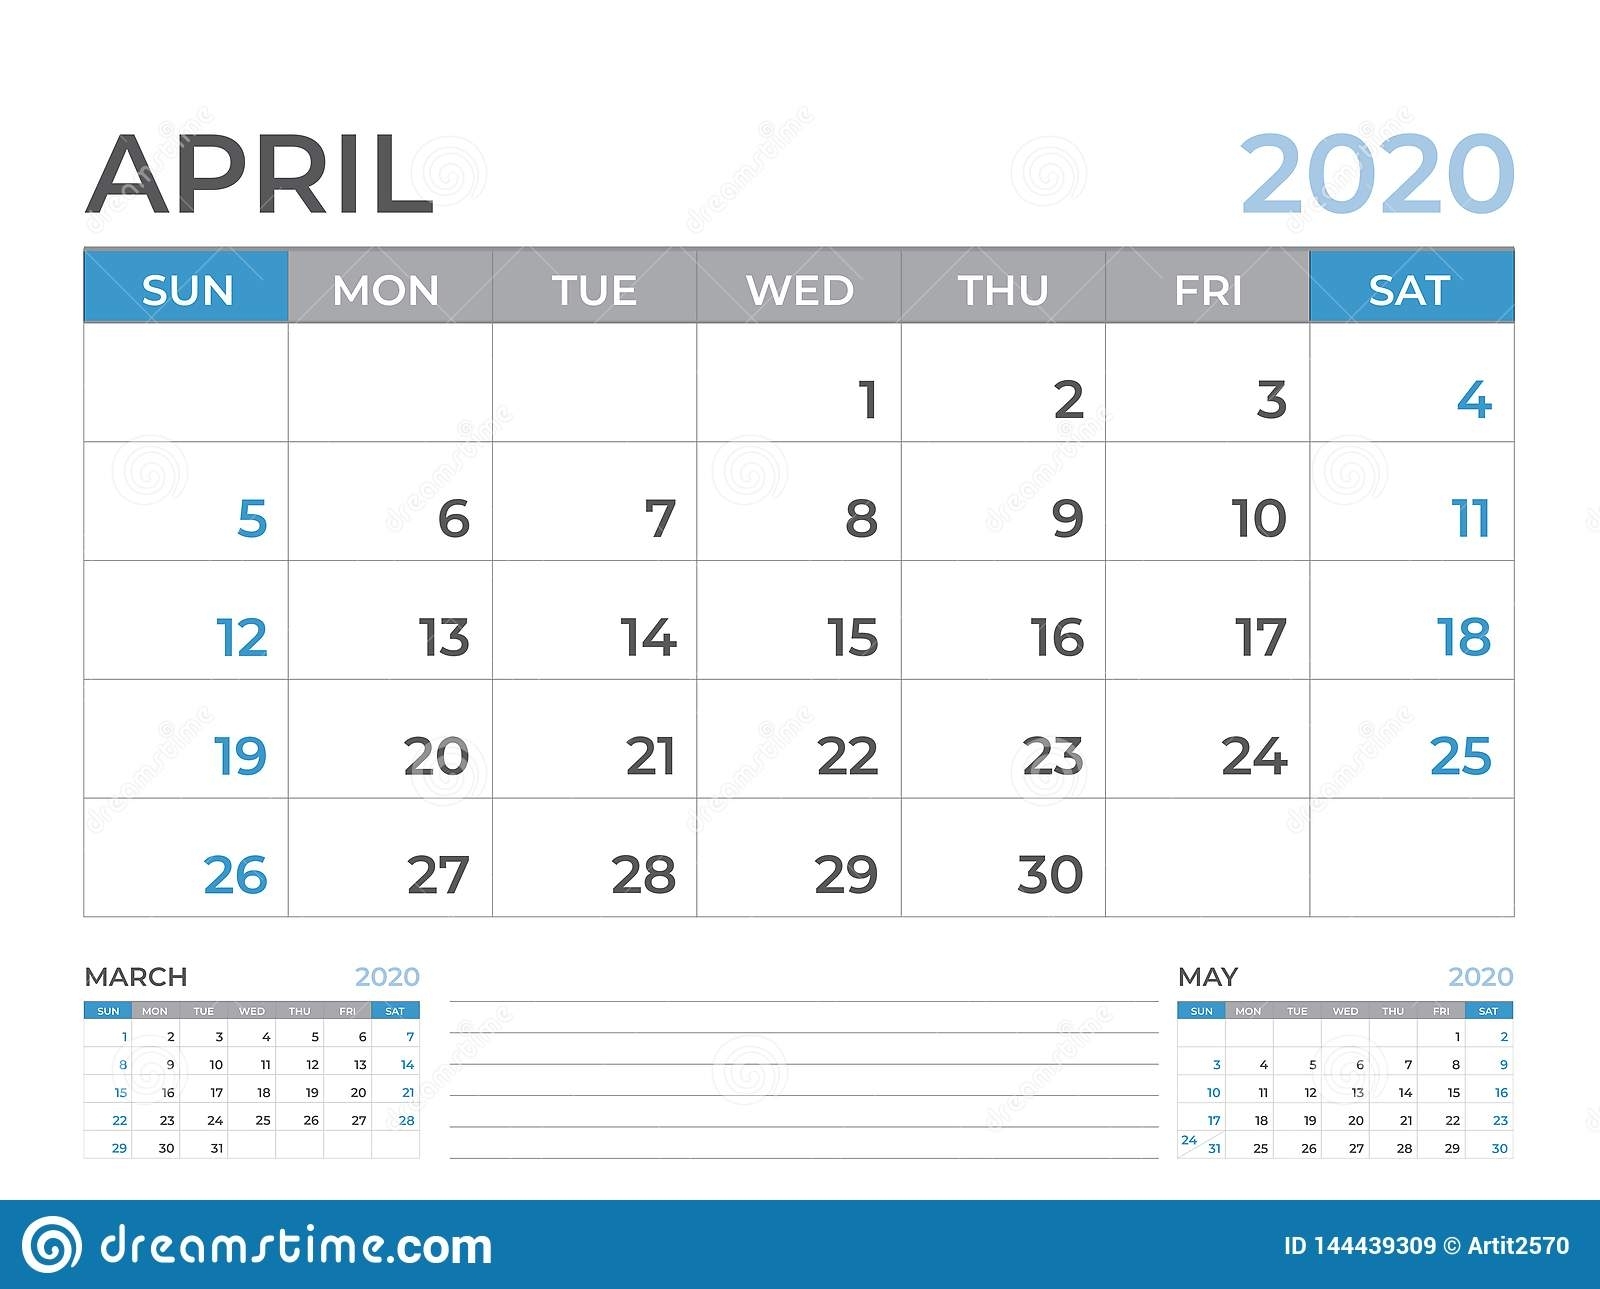 April 2020 Calendar Template, Desk Calendar Layout Size 8 X